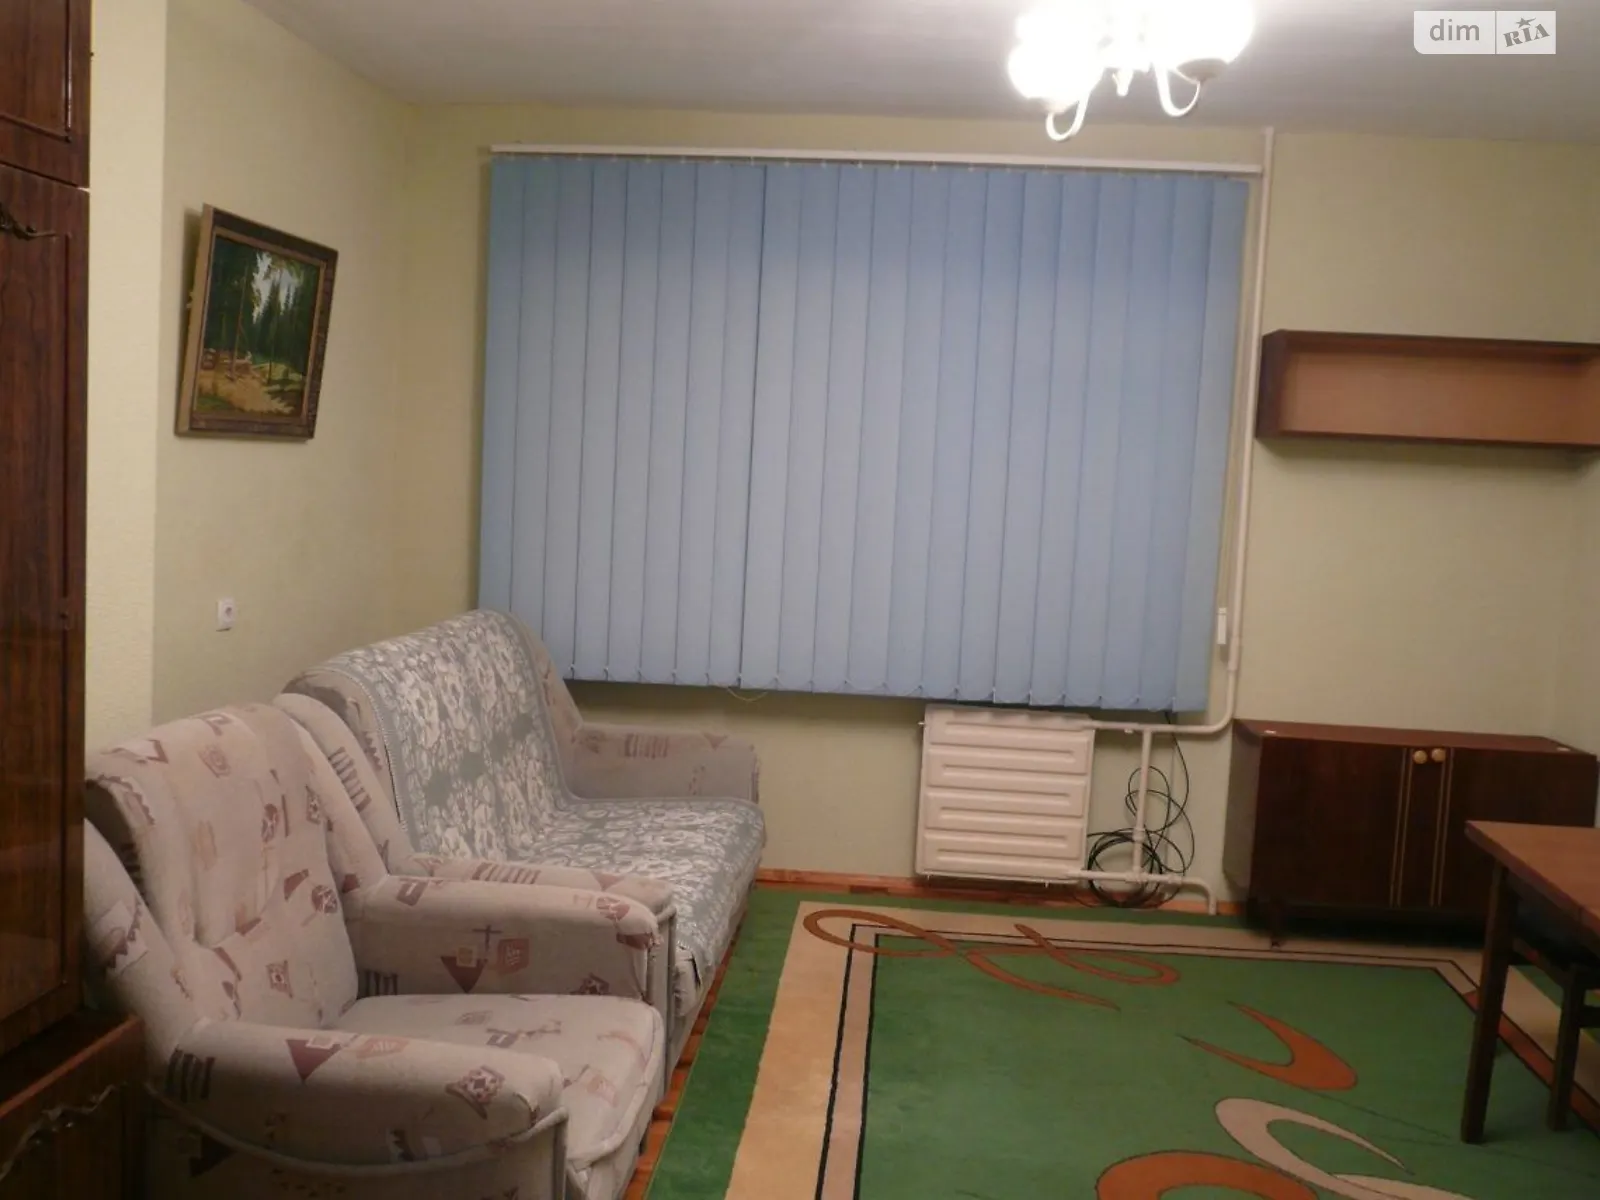 Продается комната 18 кв. м в Запорожье, цена: 7000 $ - фото 1